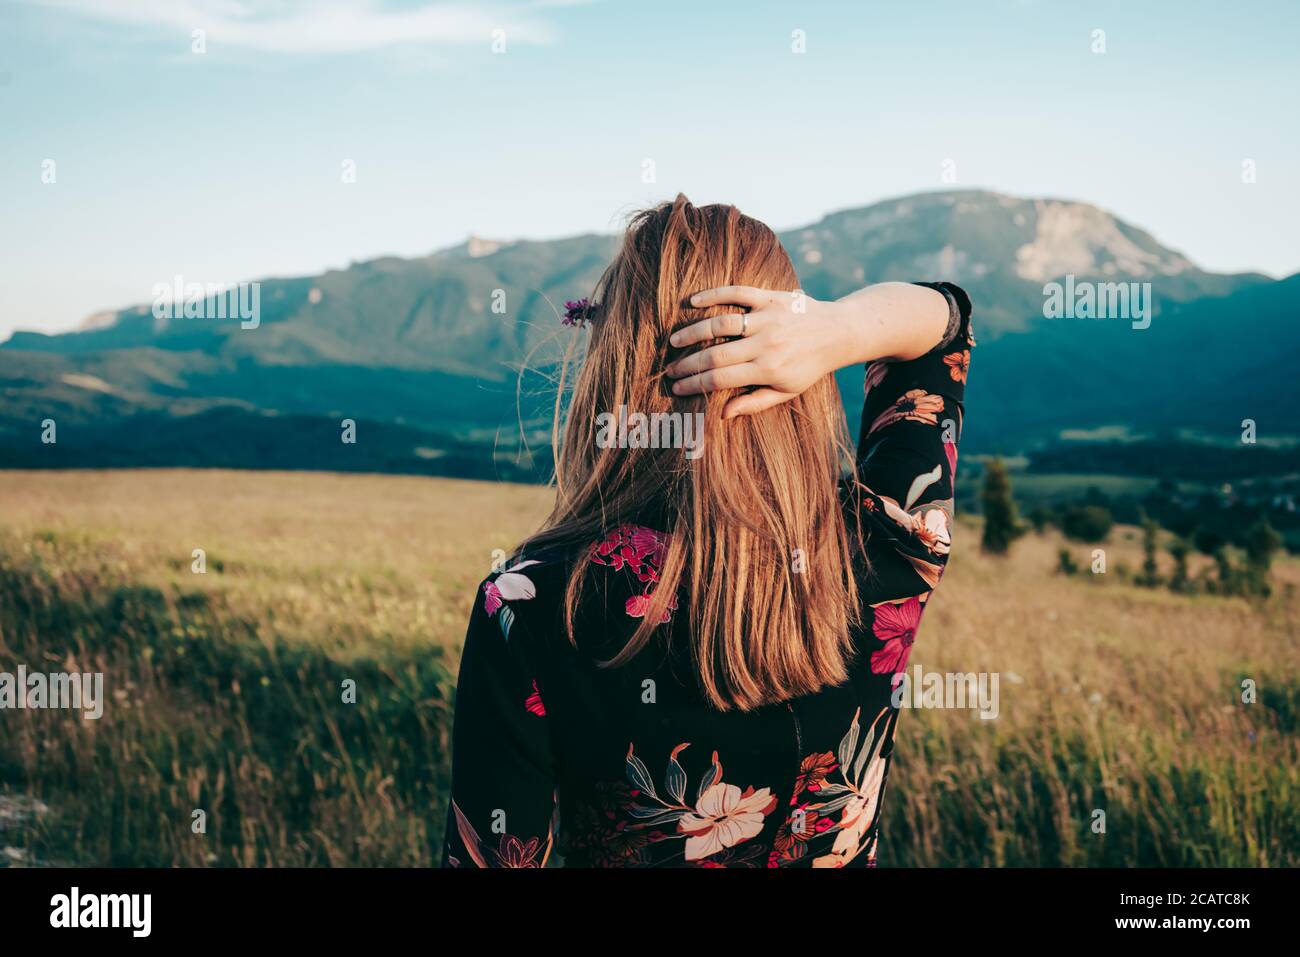 Blonde woman enjoying the mountain view and fresh air Stock Photo